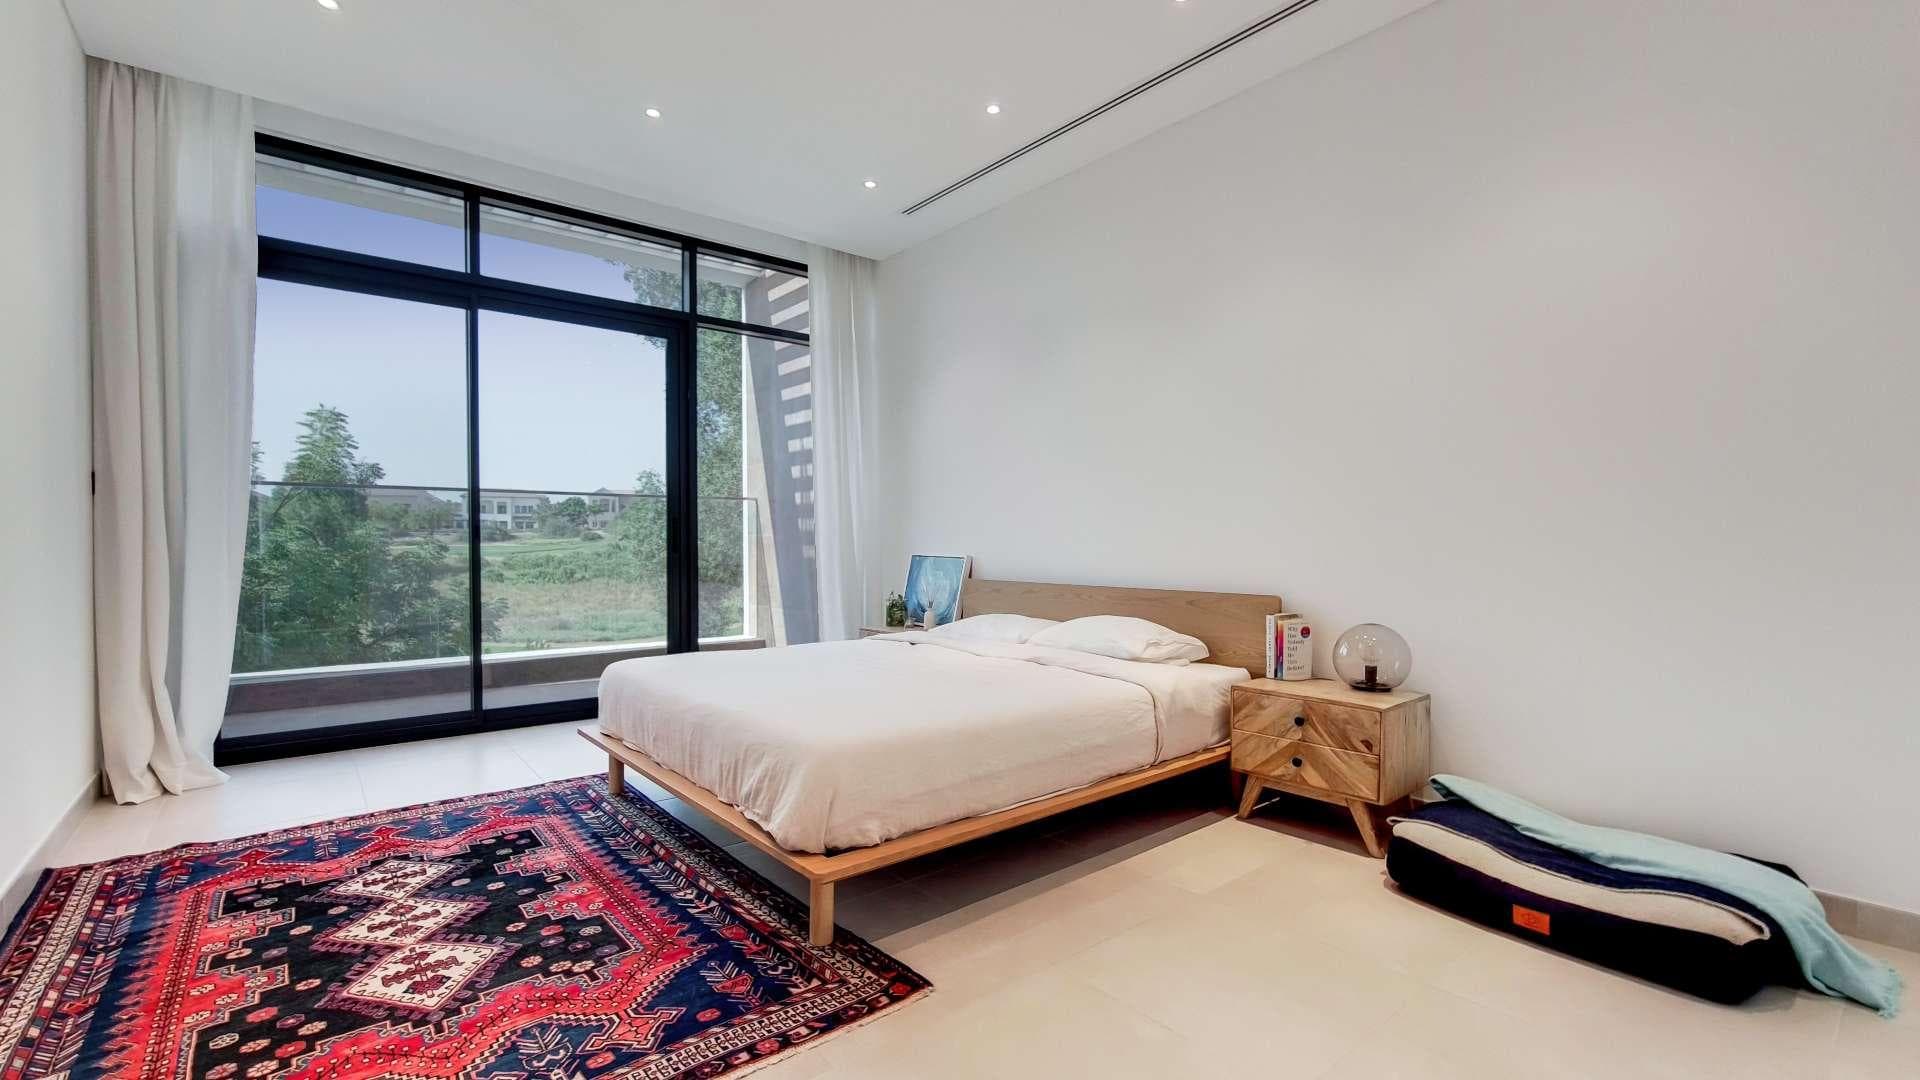 4 Bedroom Villa For Rent Jumeirah Luxury Lp18668 6f884feea406880.jpg